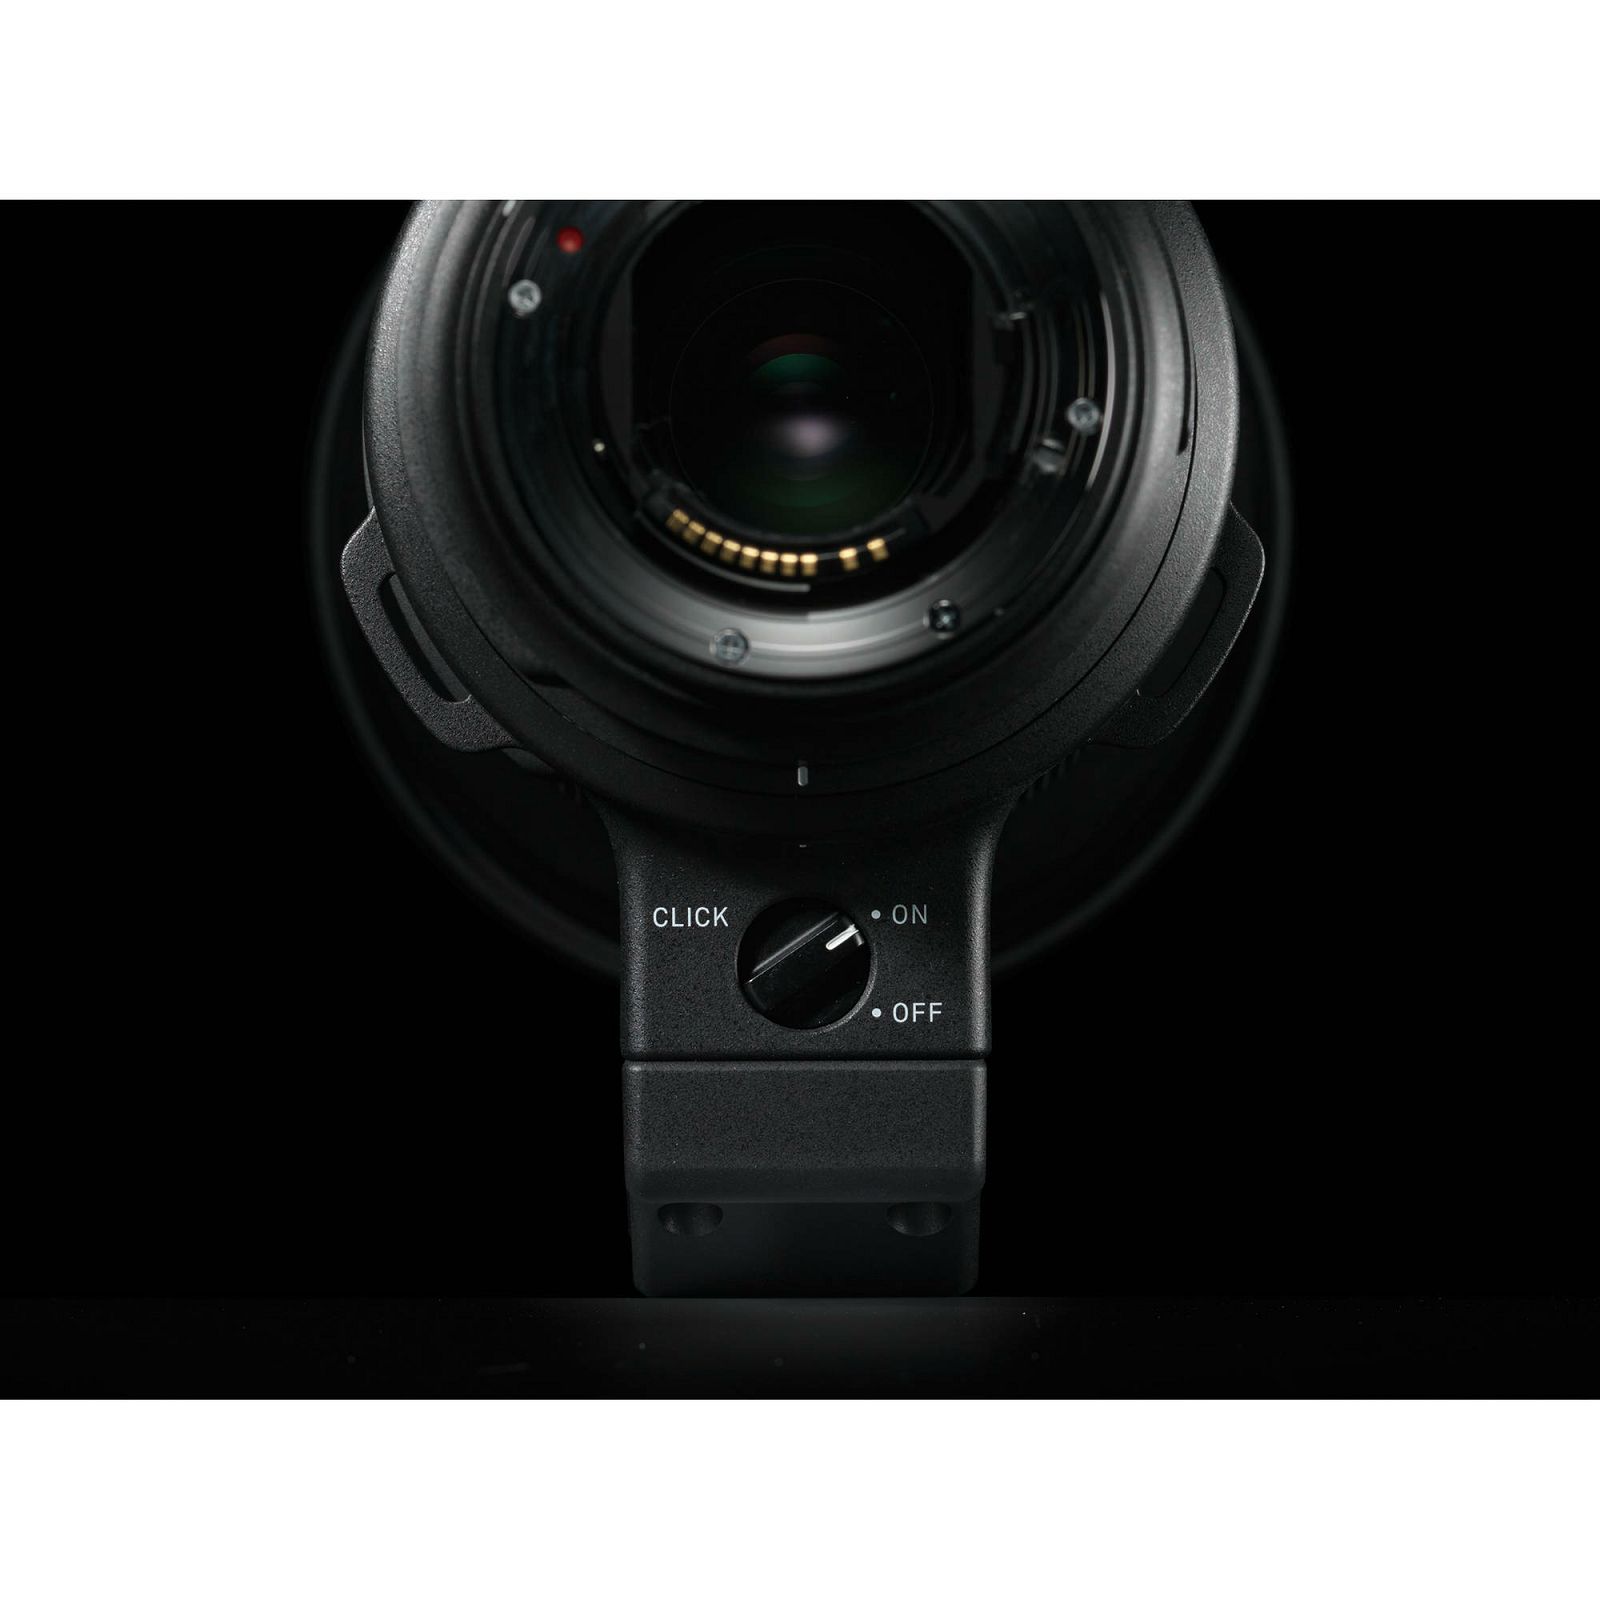 Sigma 500mm f4 DG OS HSM Sport telefoto objektiv za Canon